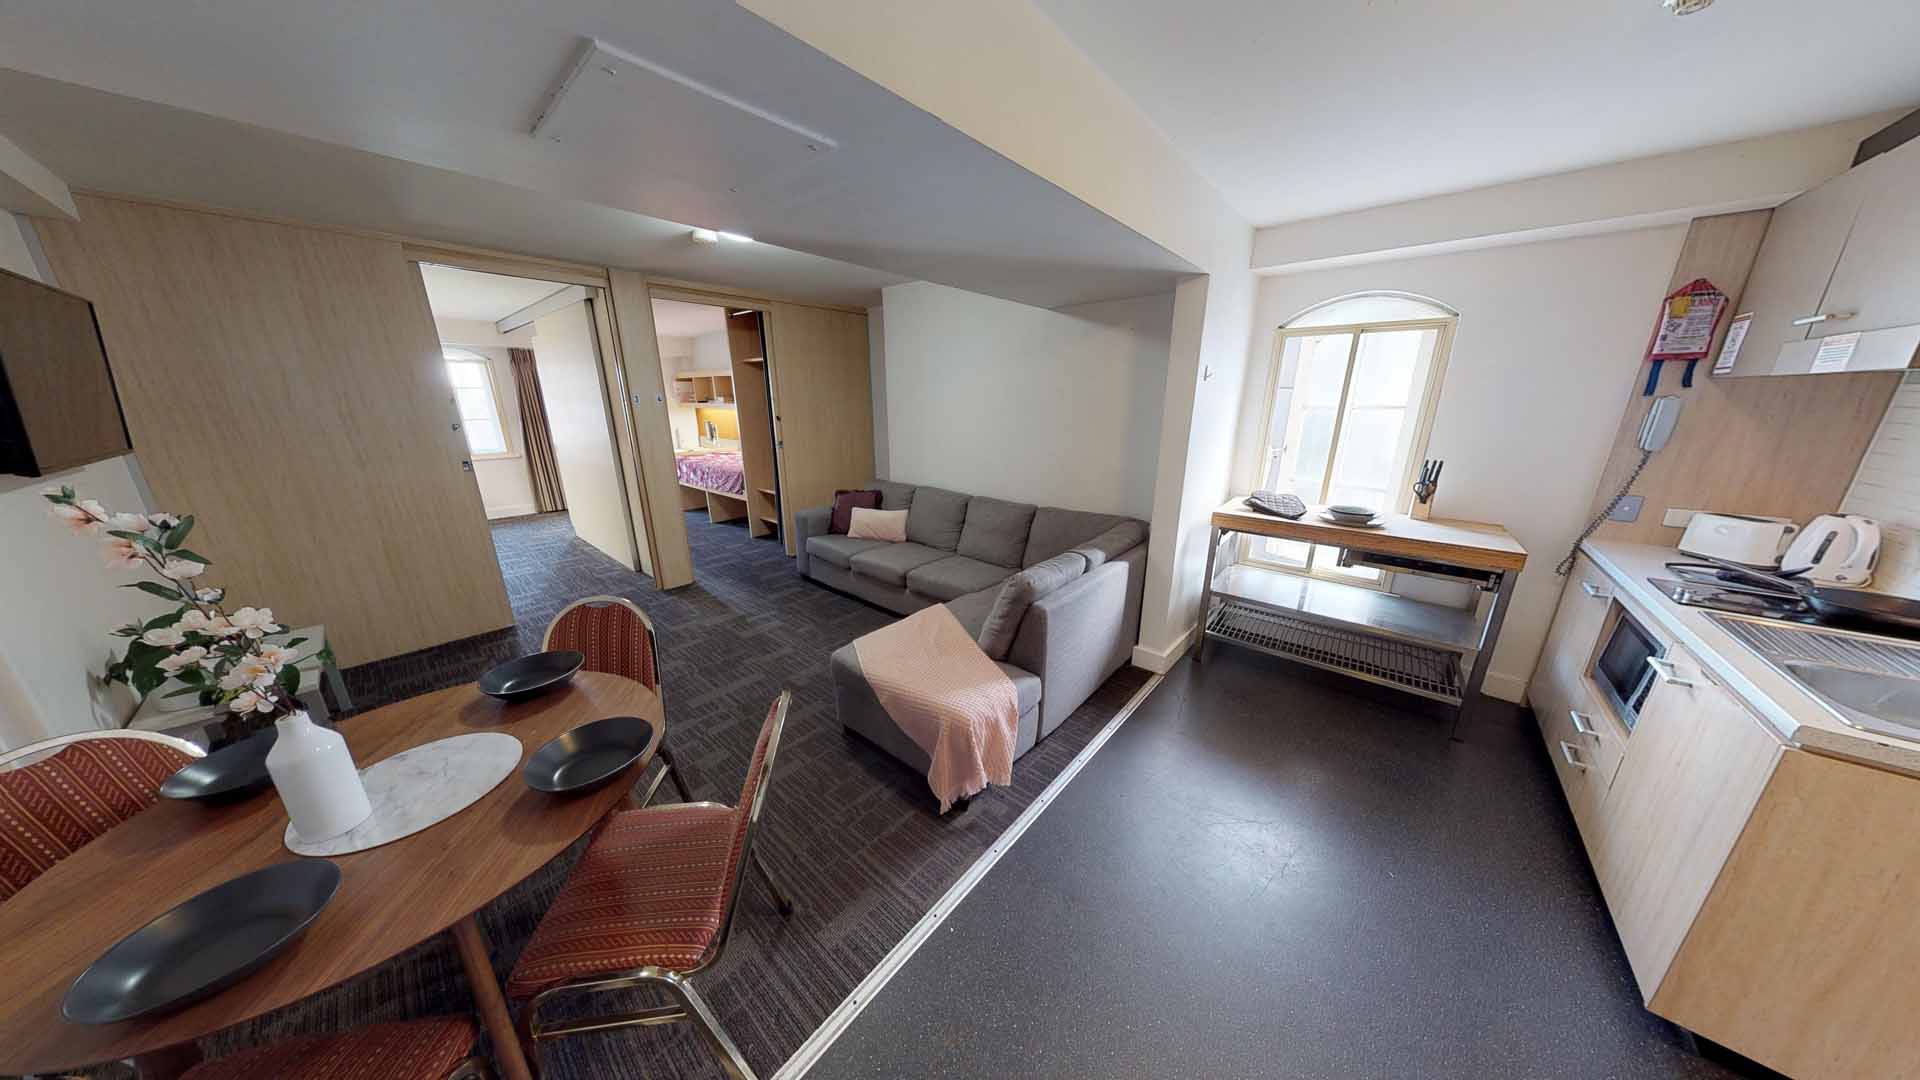 dwellVMC_5-Bedroom-Apartment-03092020_201916